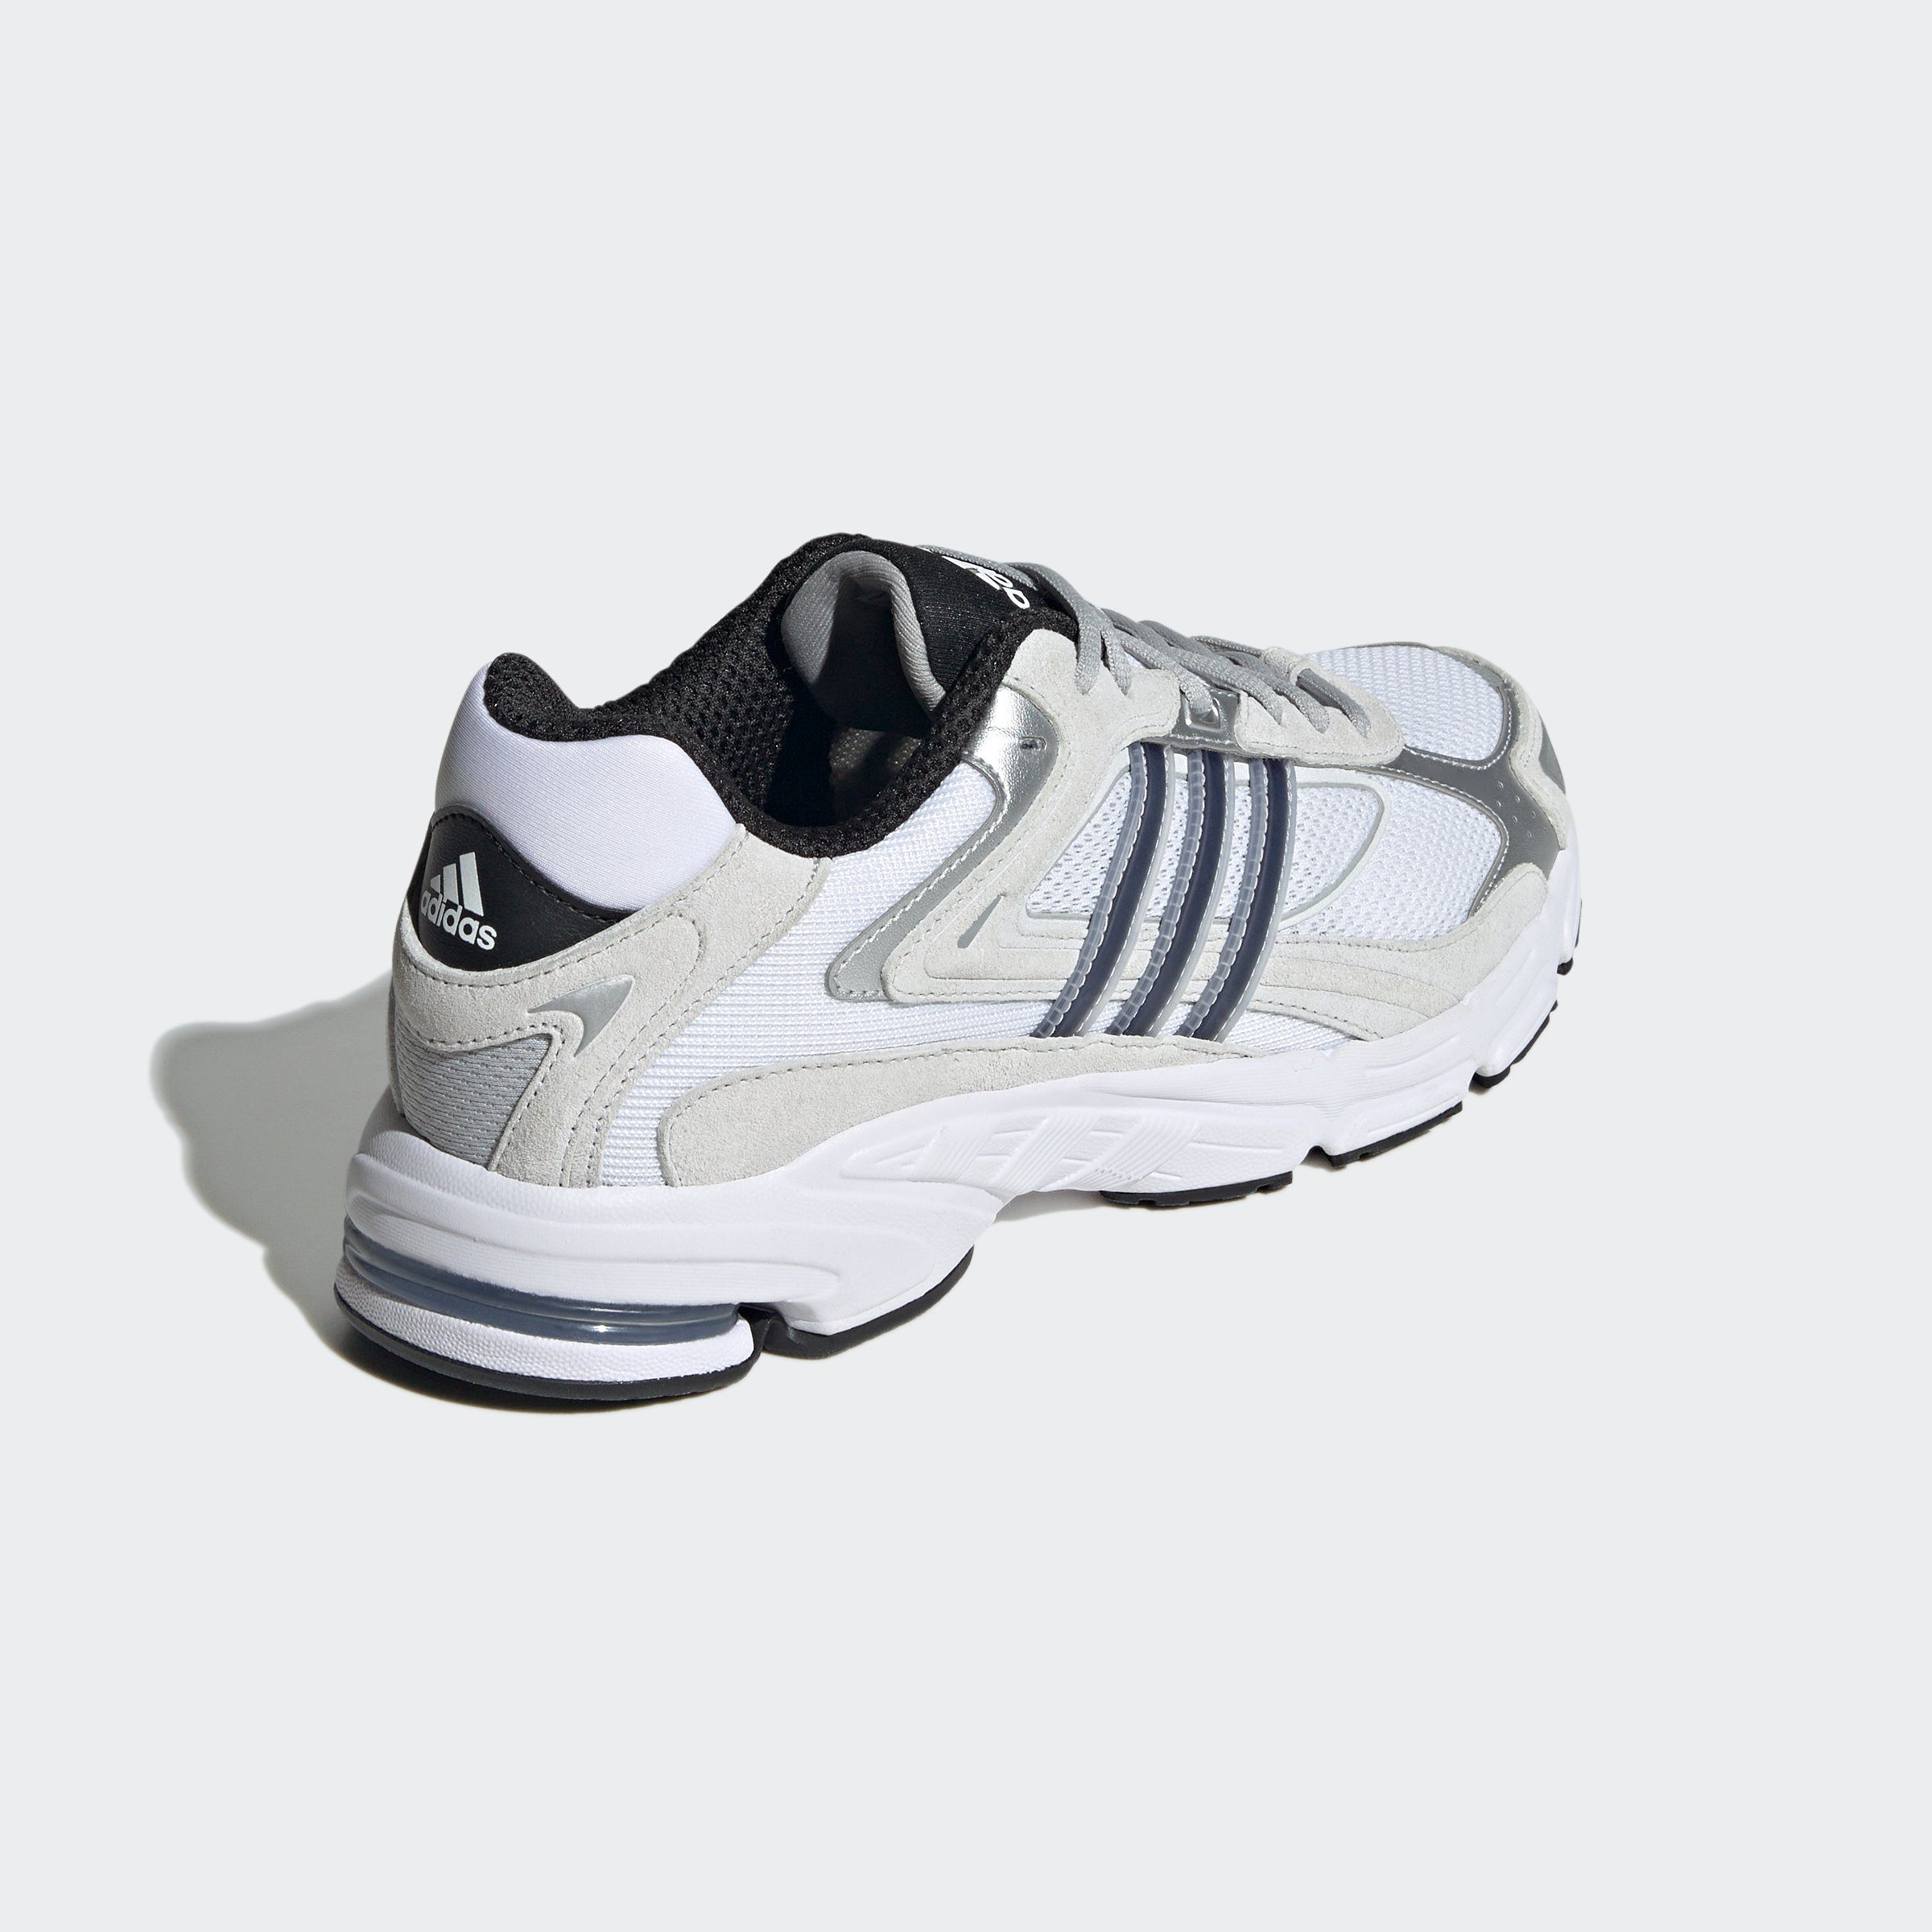 Sneaker Originals / Grey Cloud adidas Core White / CL RESPONSE Two Black